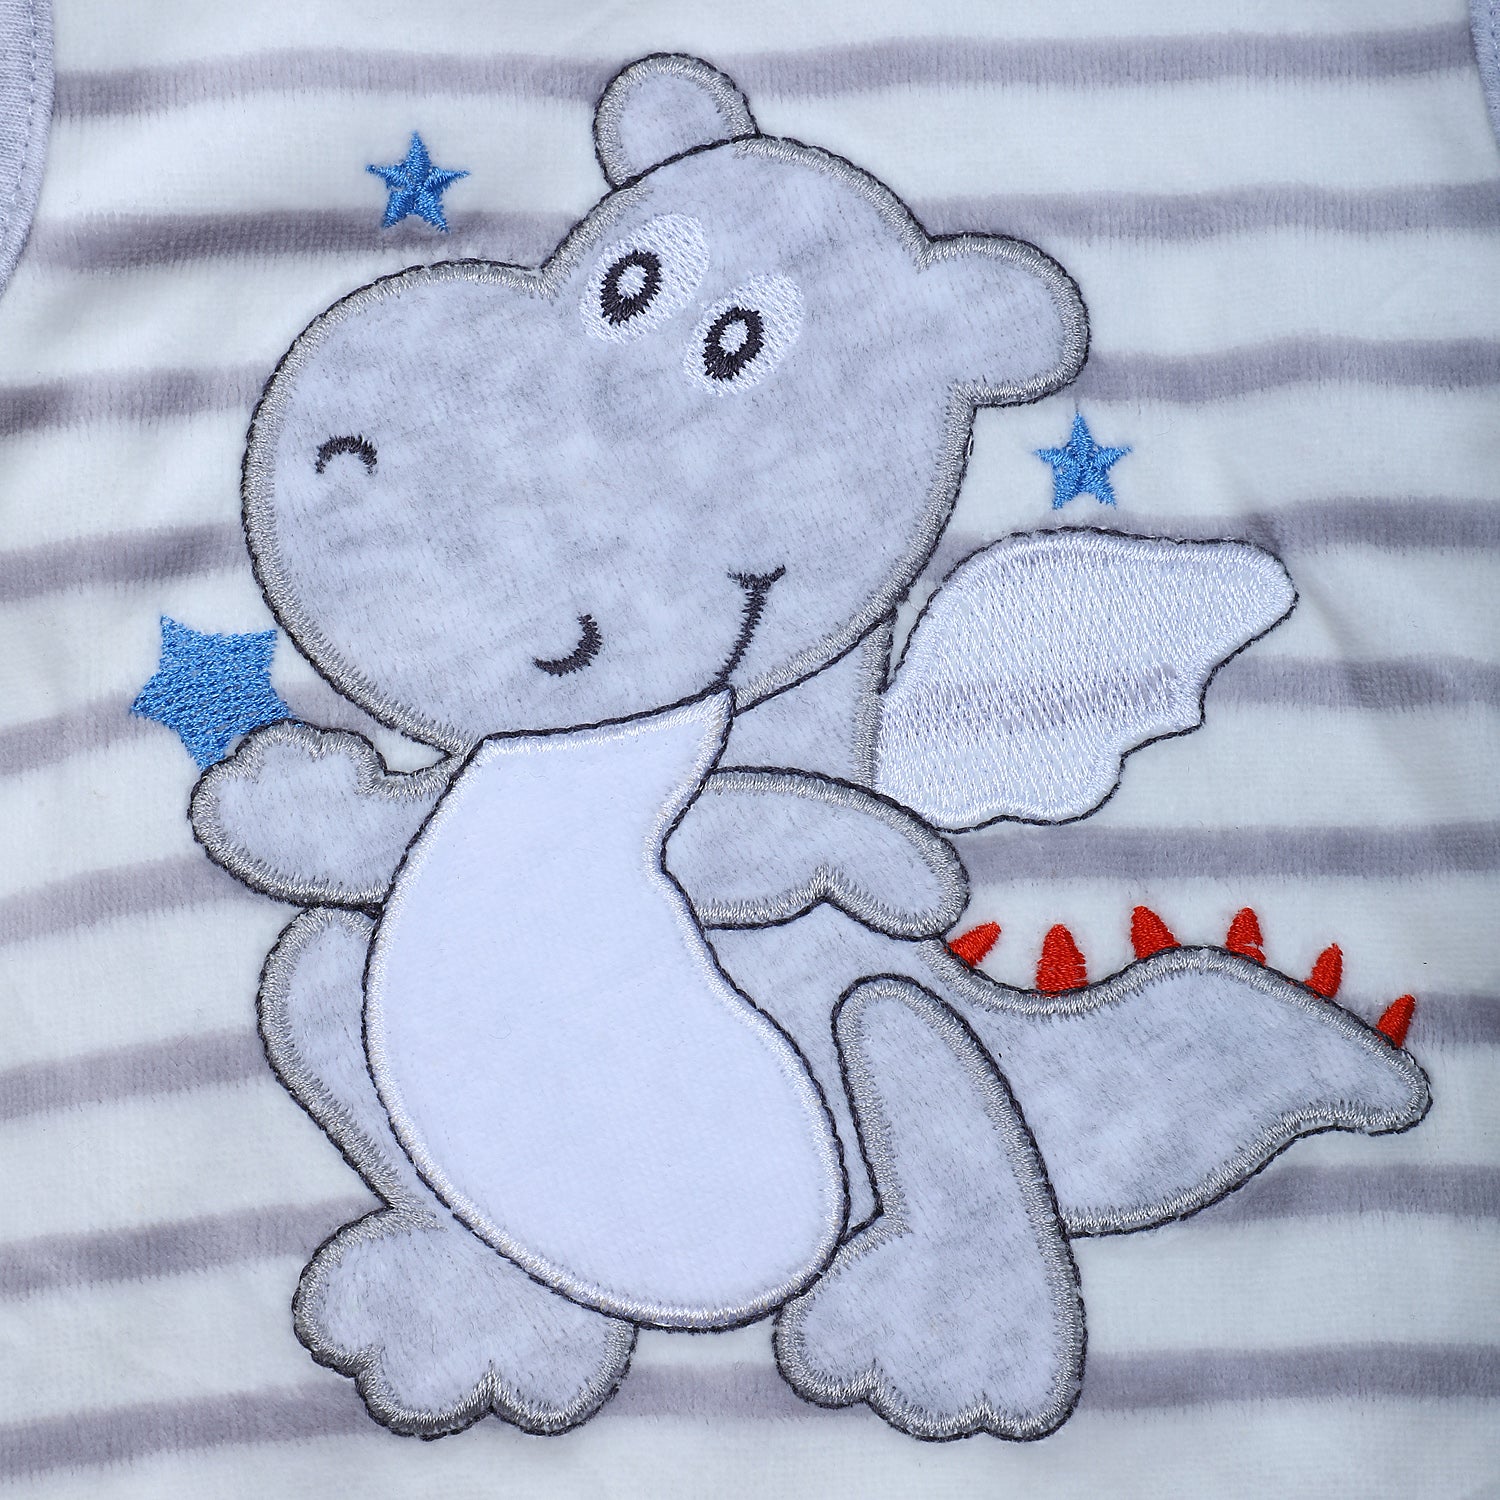 Flying Dinosaur Infant 2 Piece Full Sleeves Tshirt And Romper Set - Grey - Baby Moo